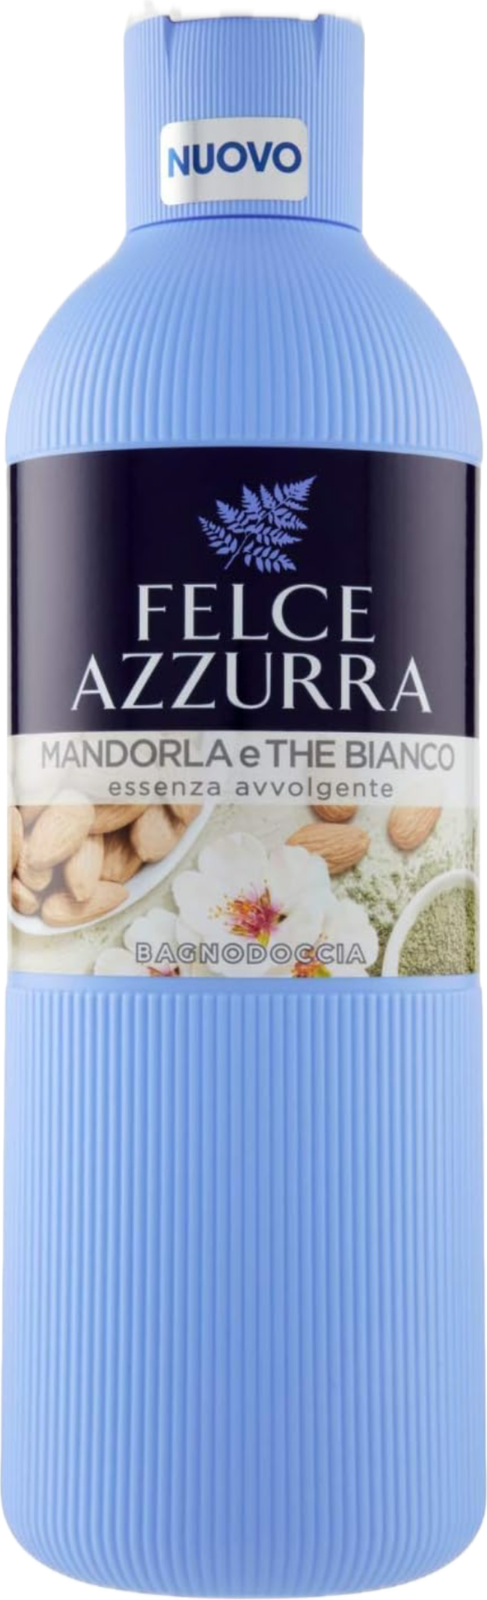 Felce Azzurra varie fragranze come in foto Bagno Doccia Bagnoschiuma 650ml